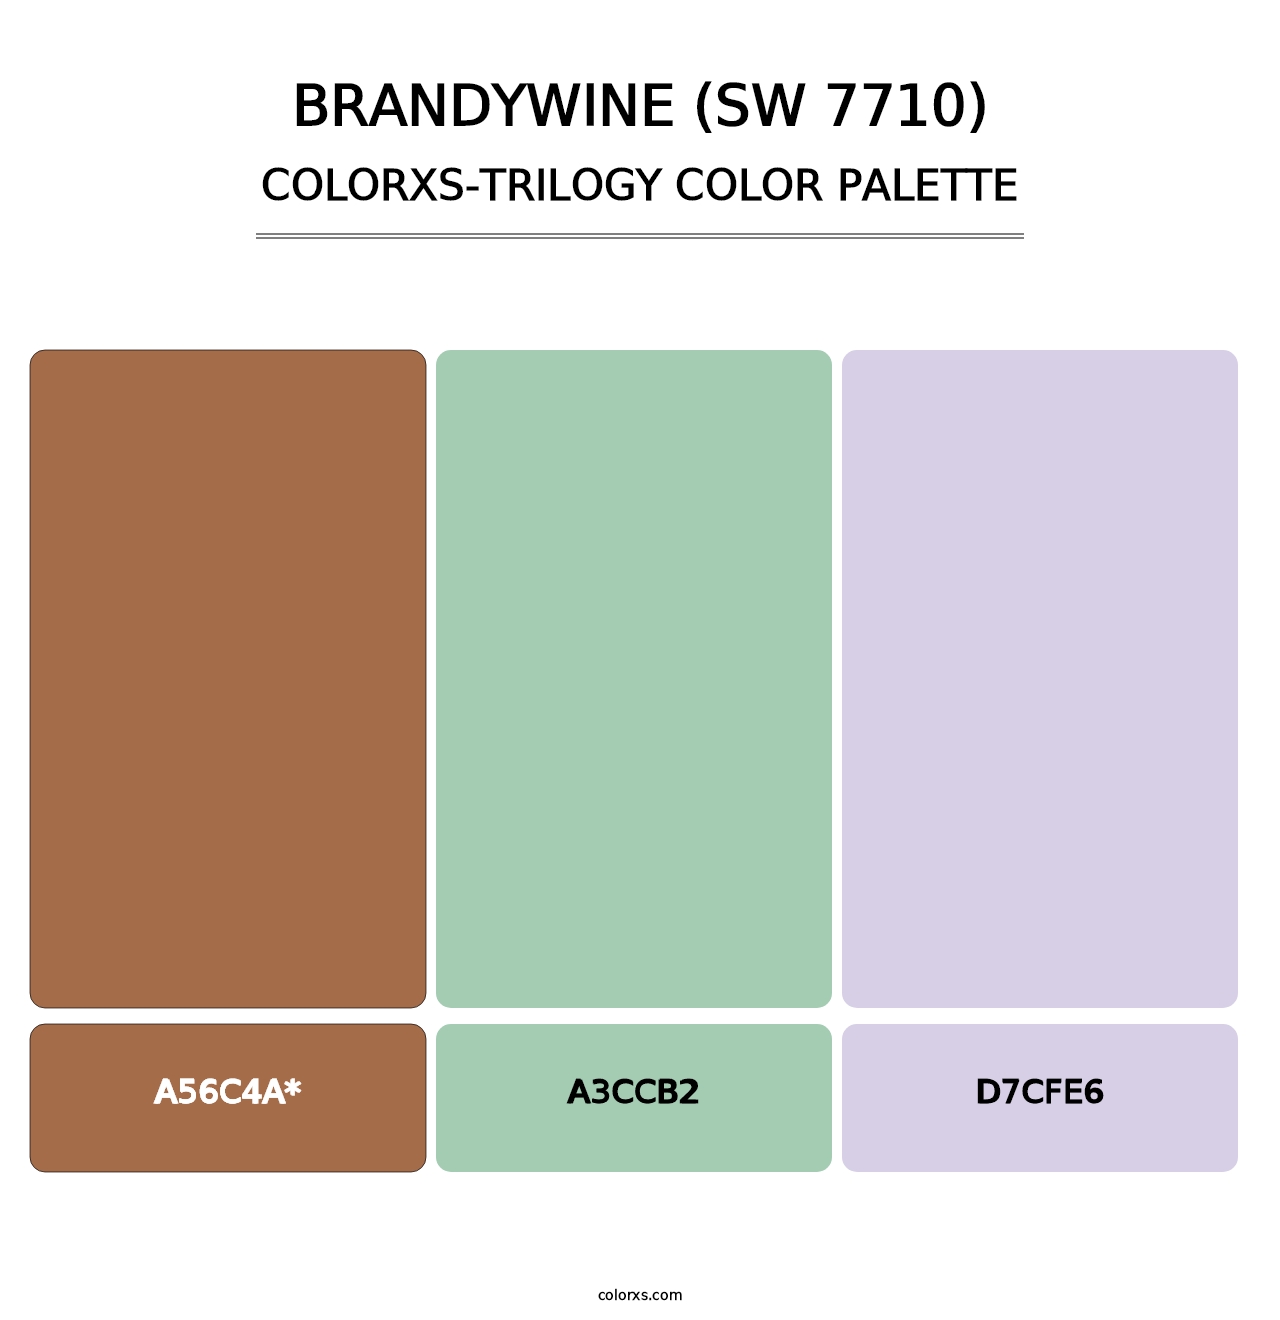 Brandywine (SW 7710) - Colorxs Trilogy Palette